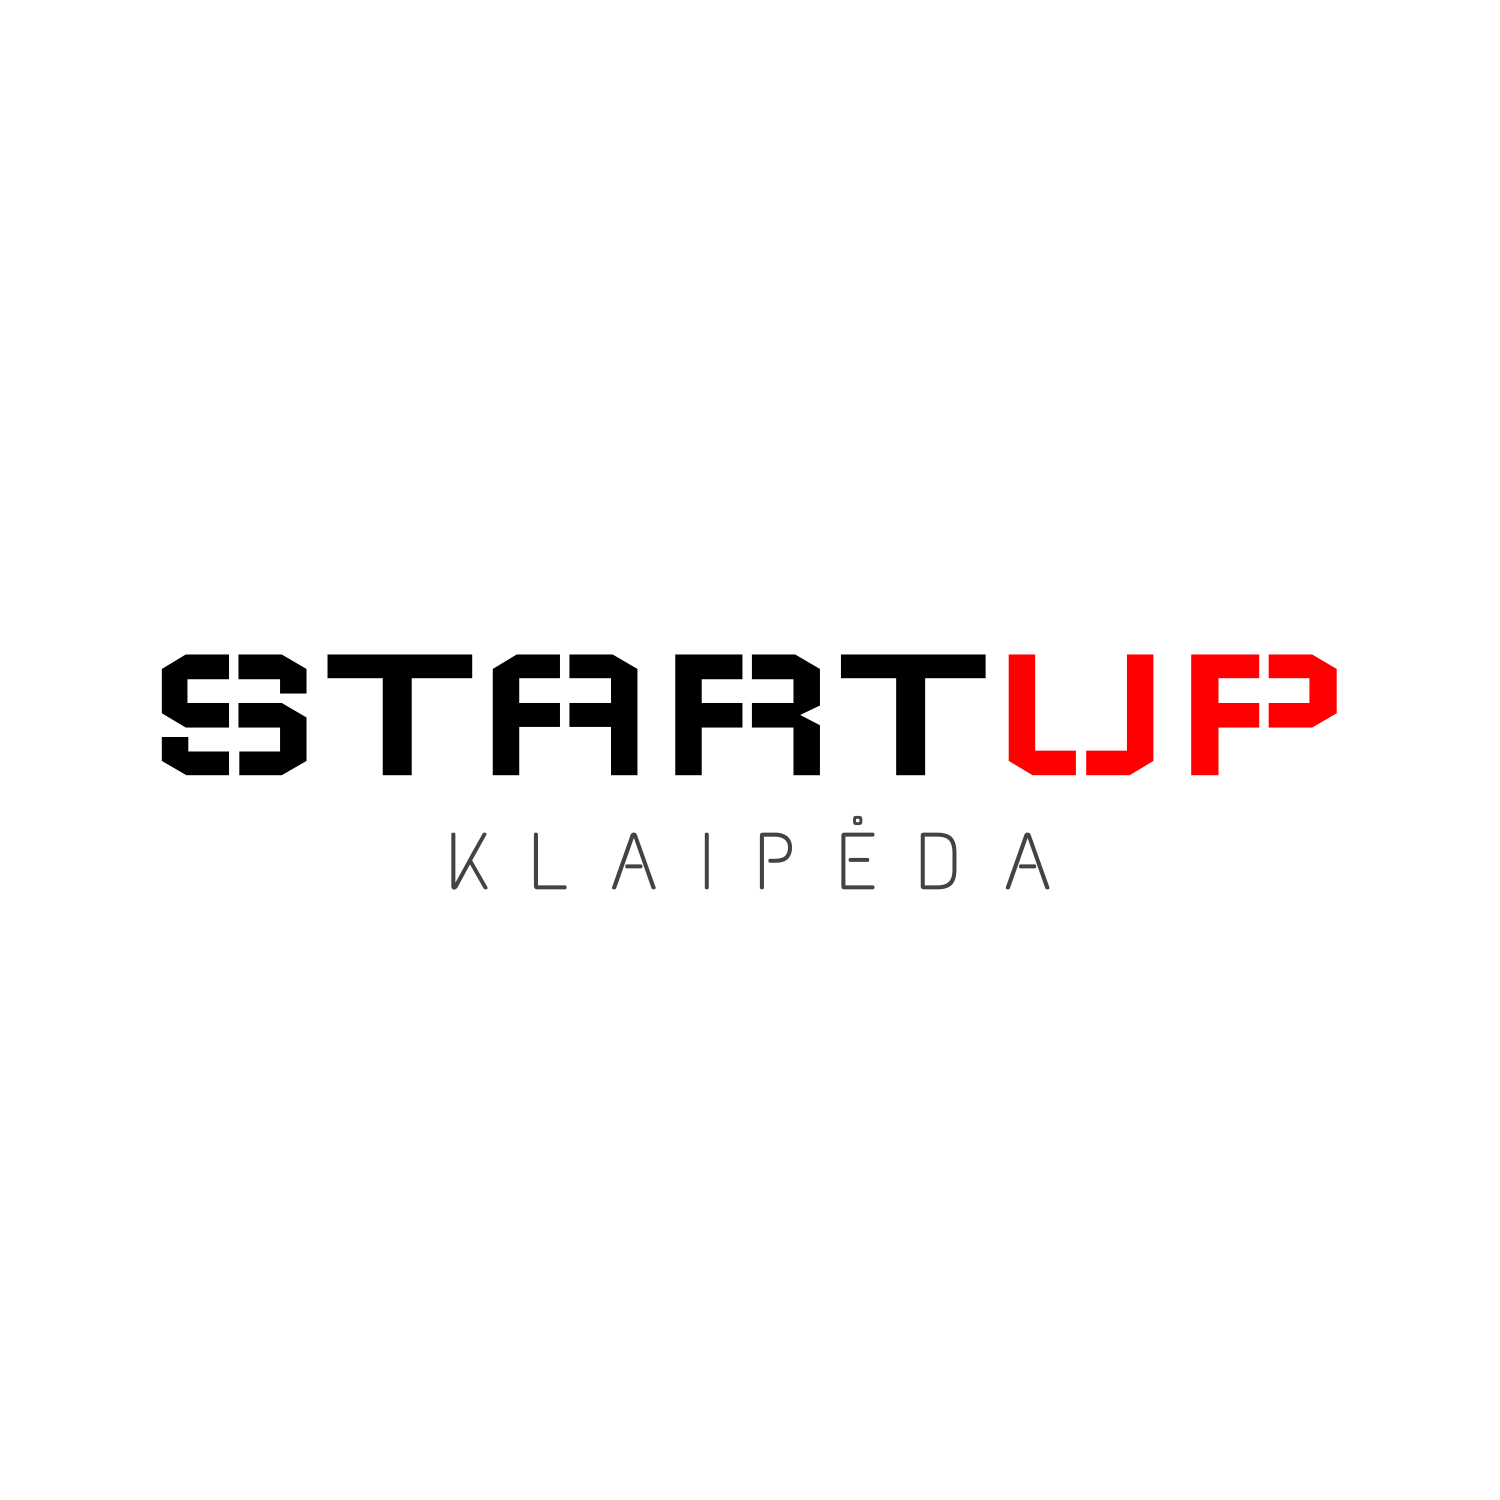 Logo design Startup Klaipėda